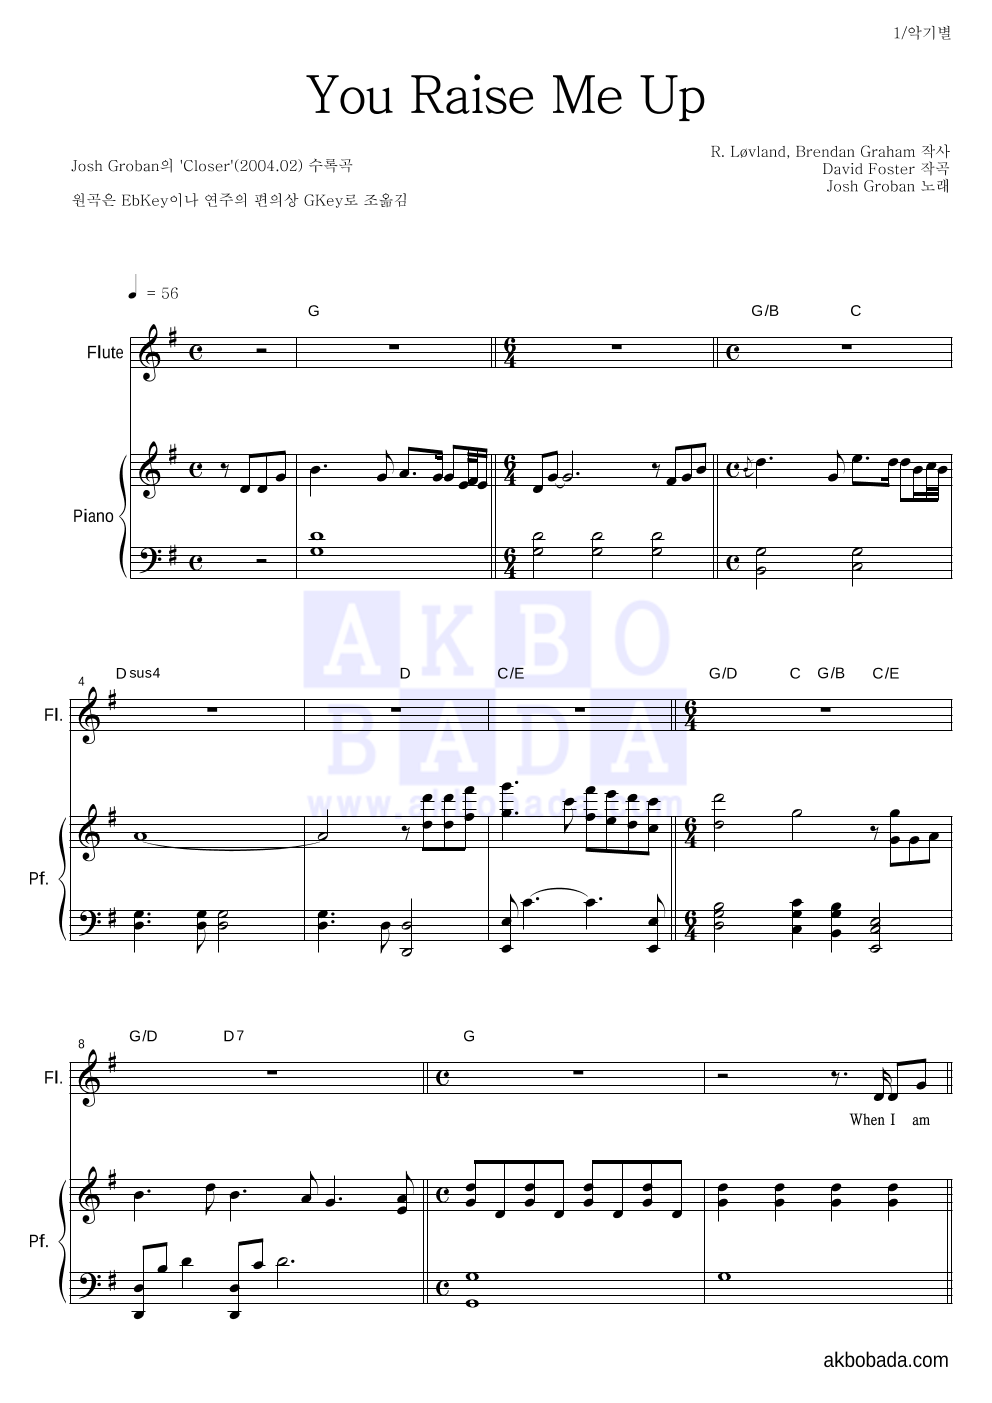 Josh Groban - You Raise Me Up 플룻&피아노 악보 